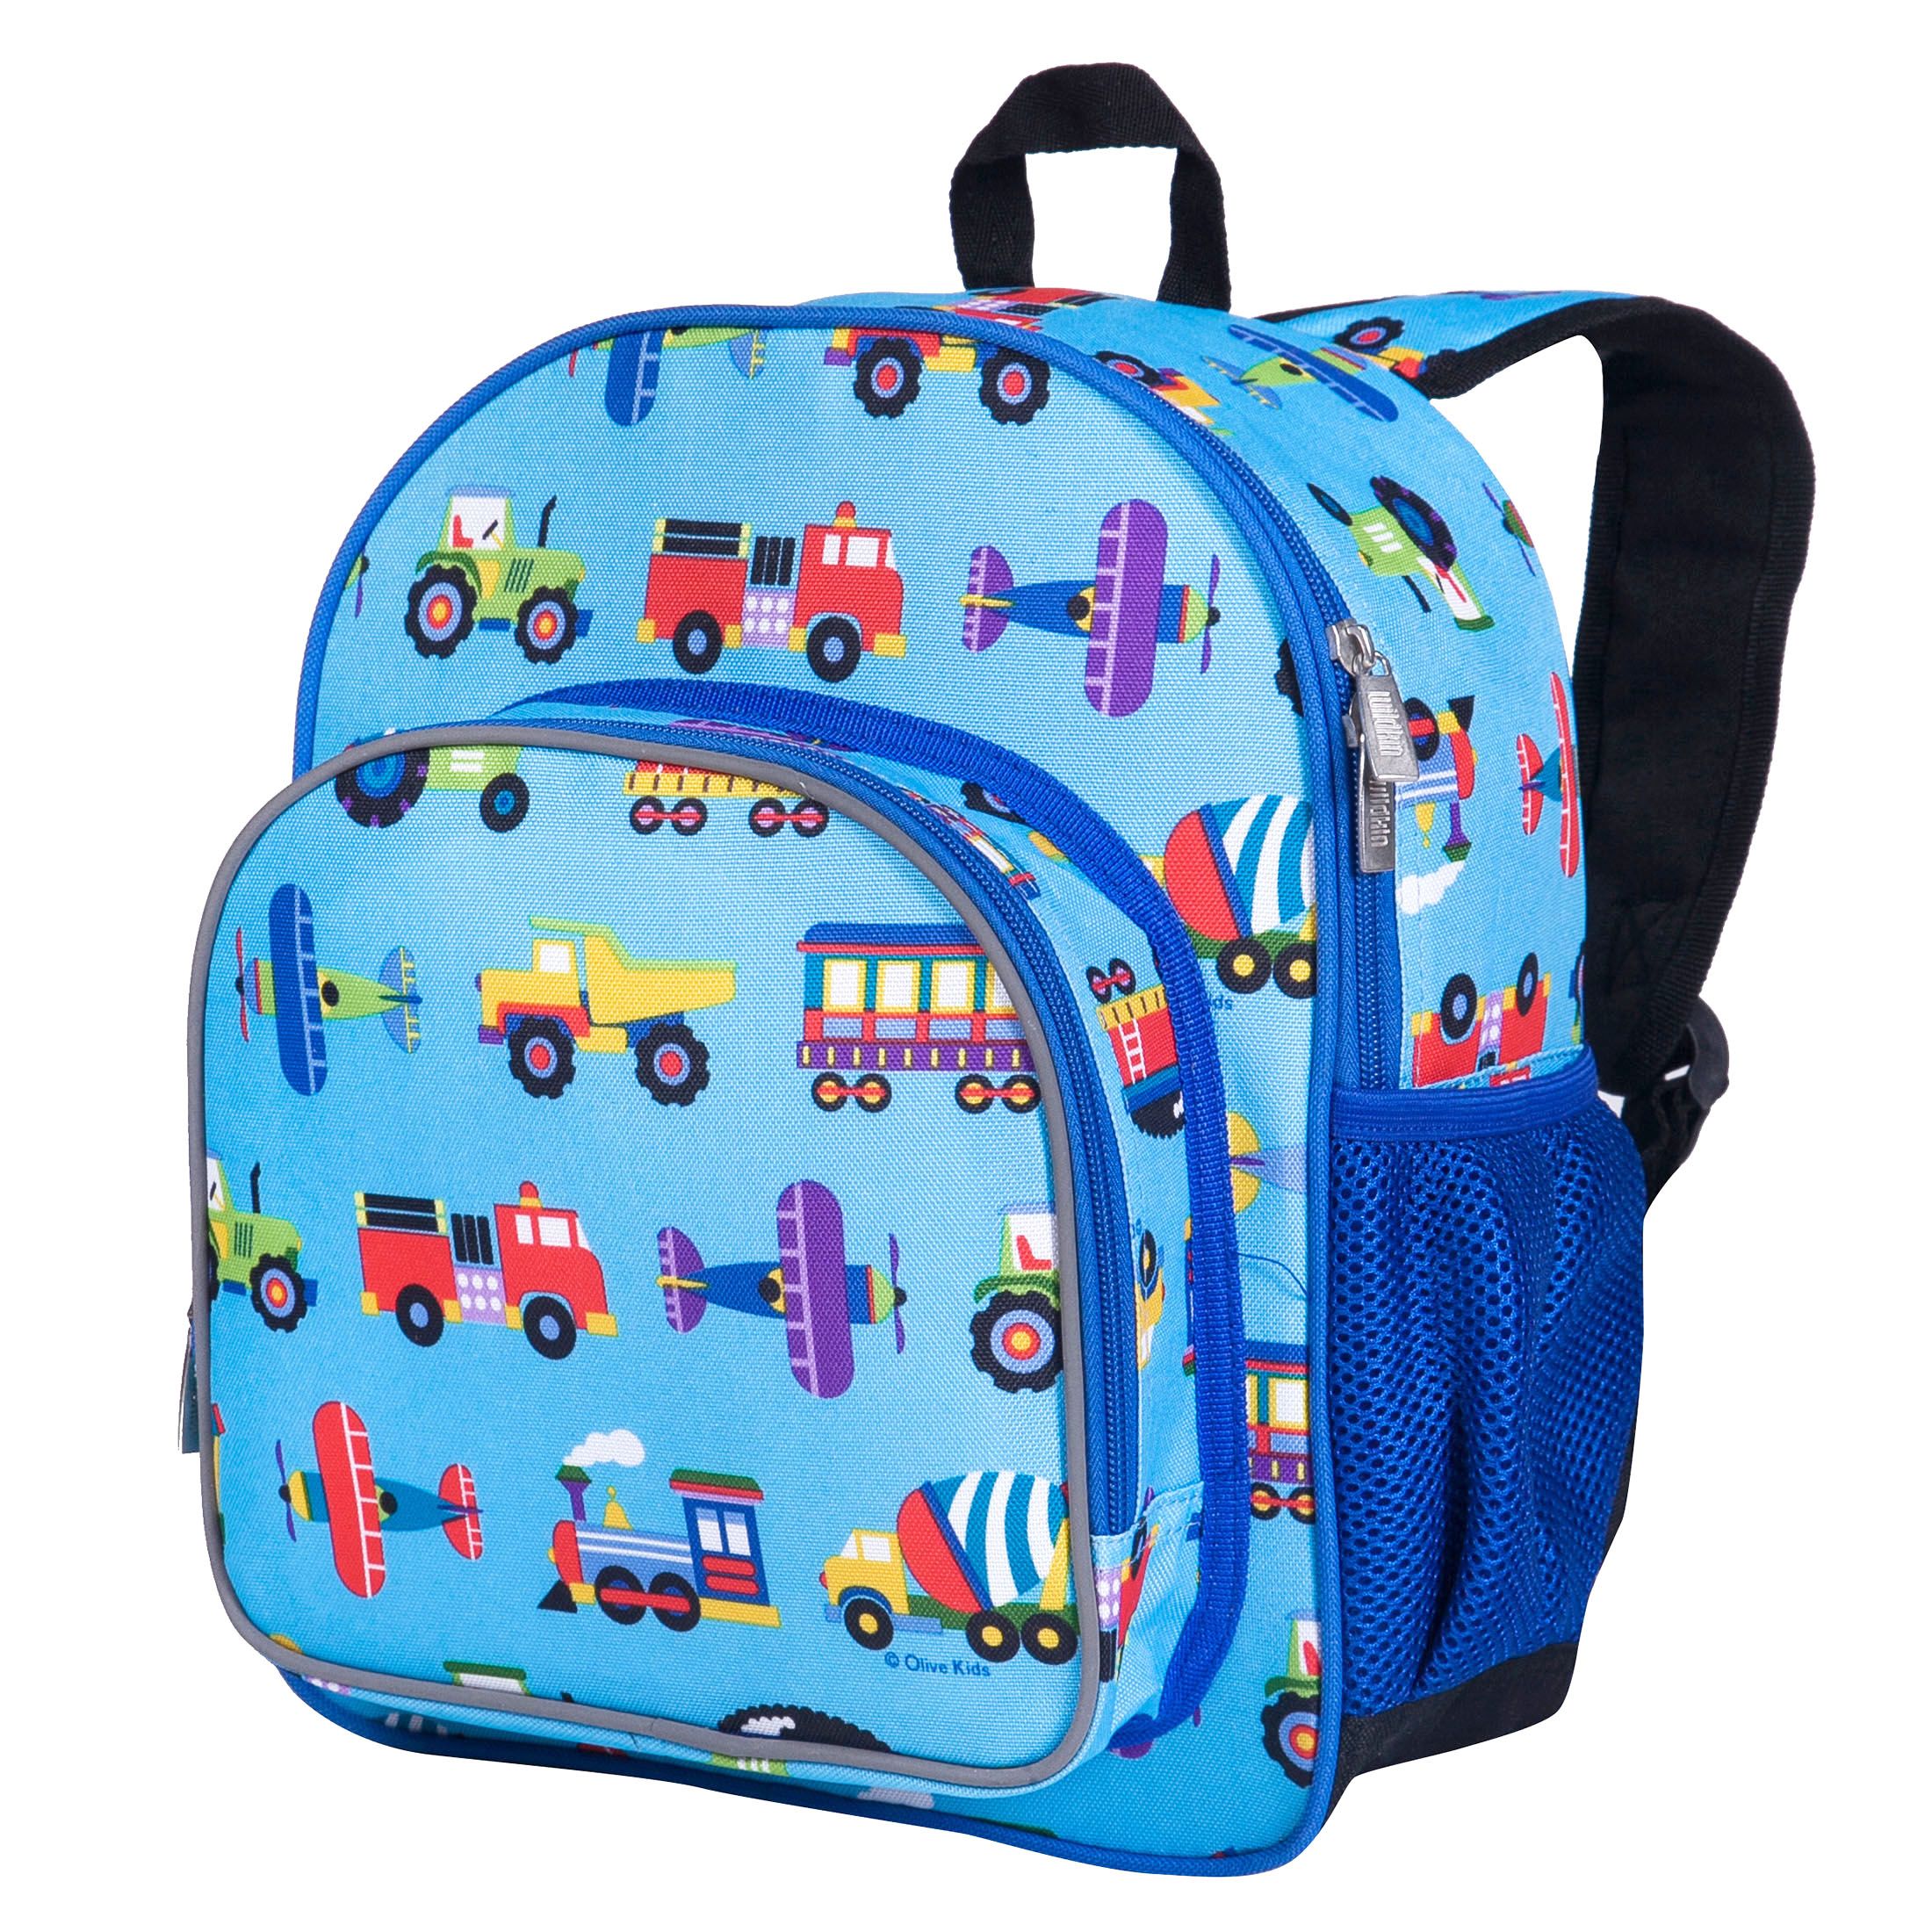 Personalised School Bag Backpack Rucksack for a Boy Kid's Name & Design Blue 